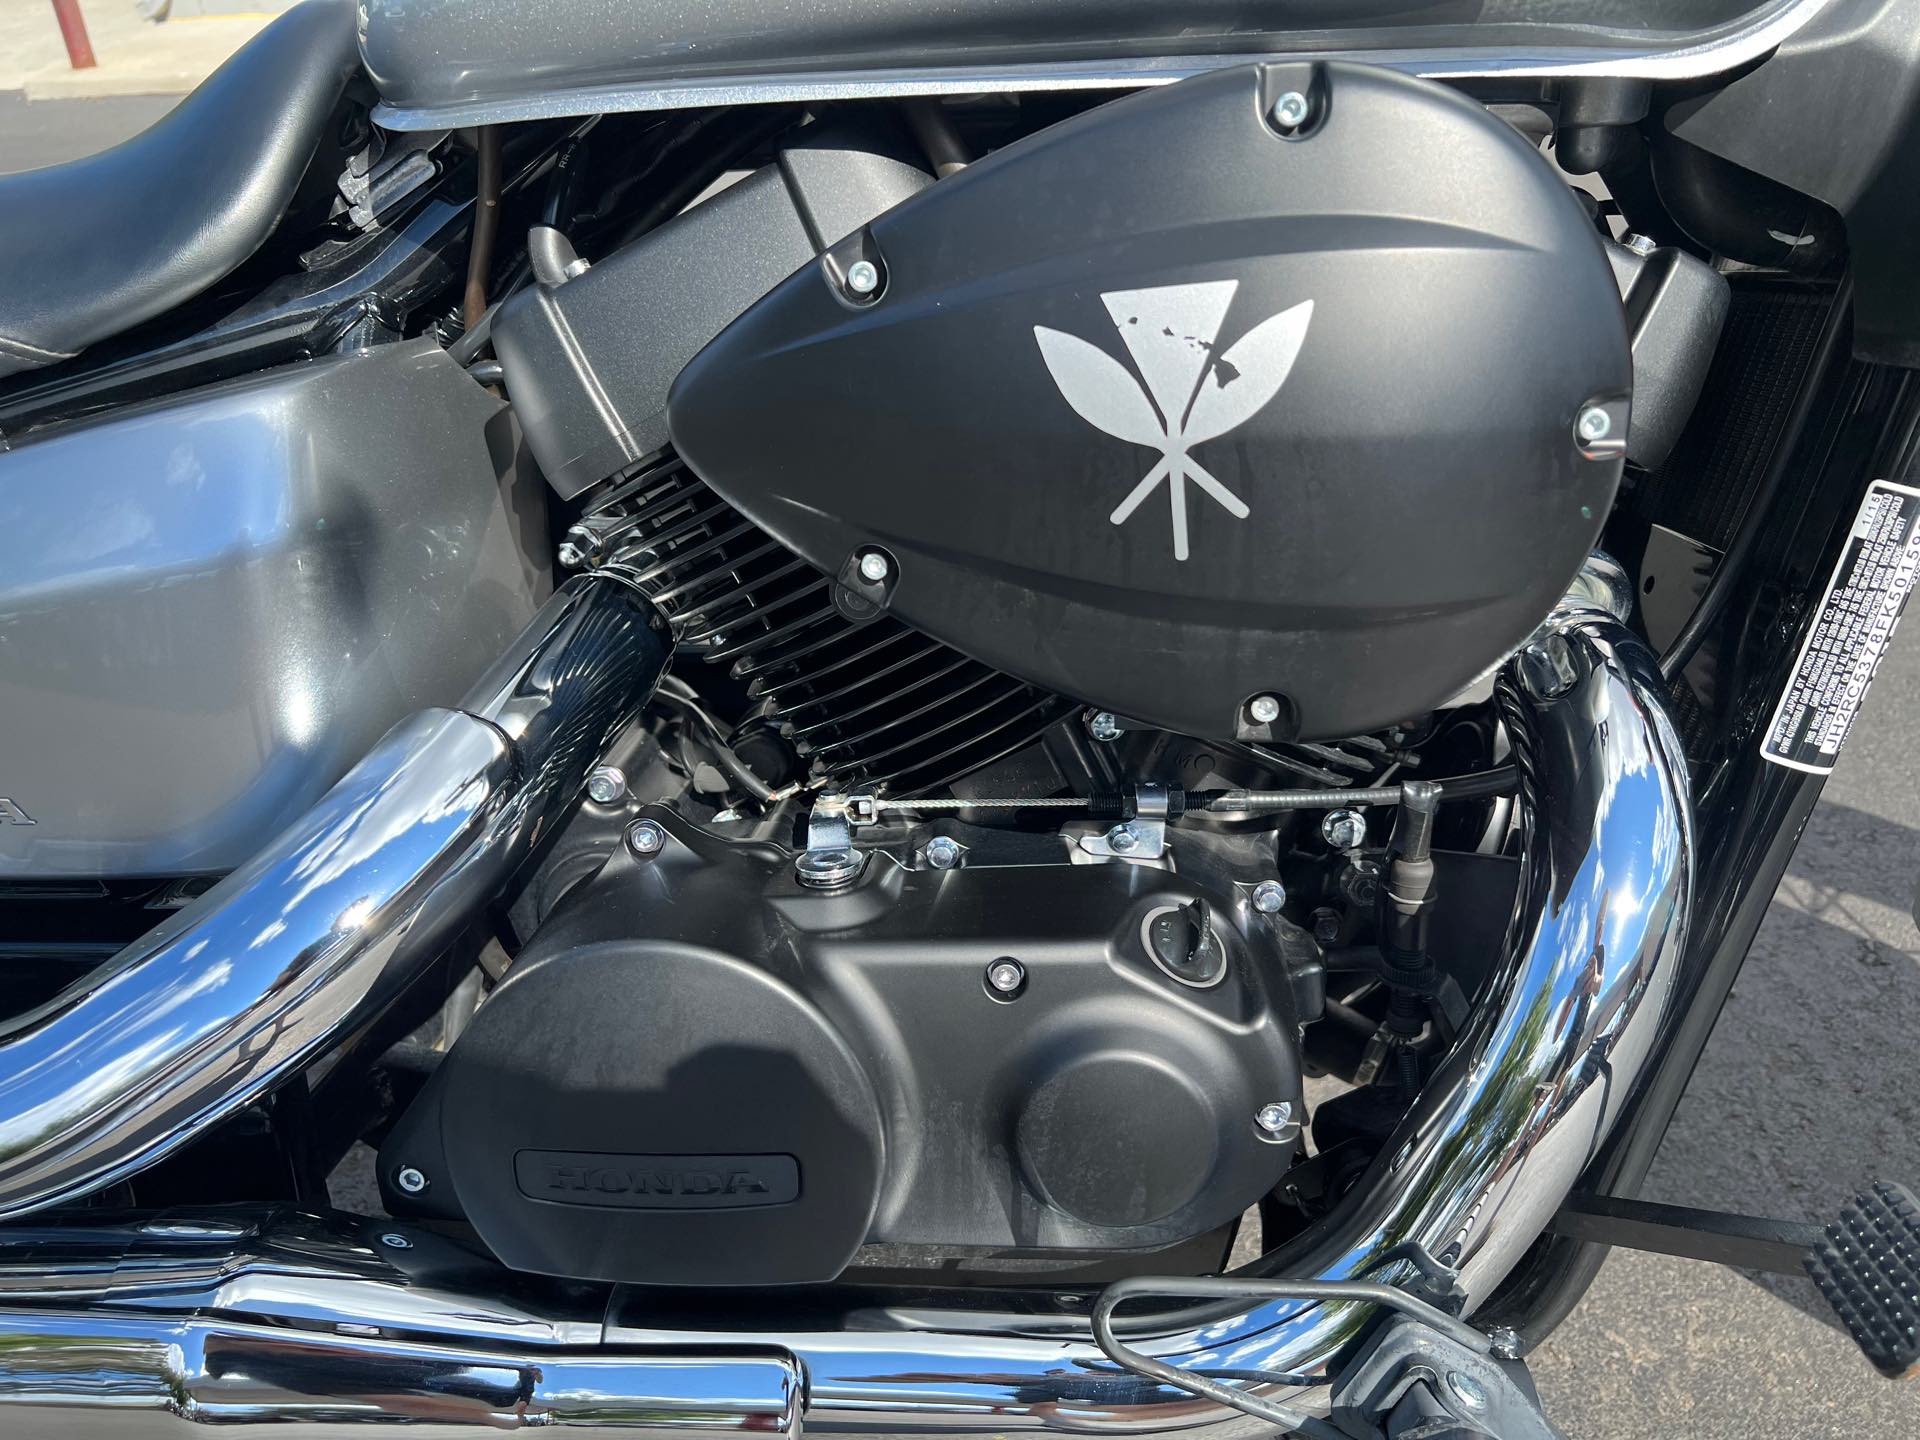 2015 Honda Shadow Phantom at Aces Motorcycles - Fort Collins